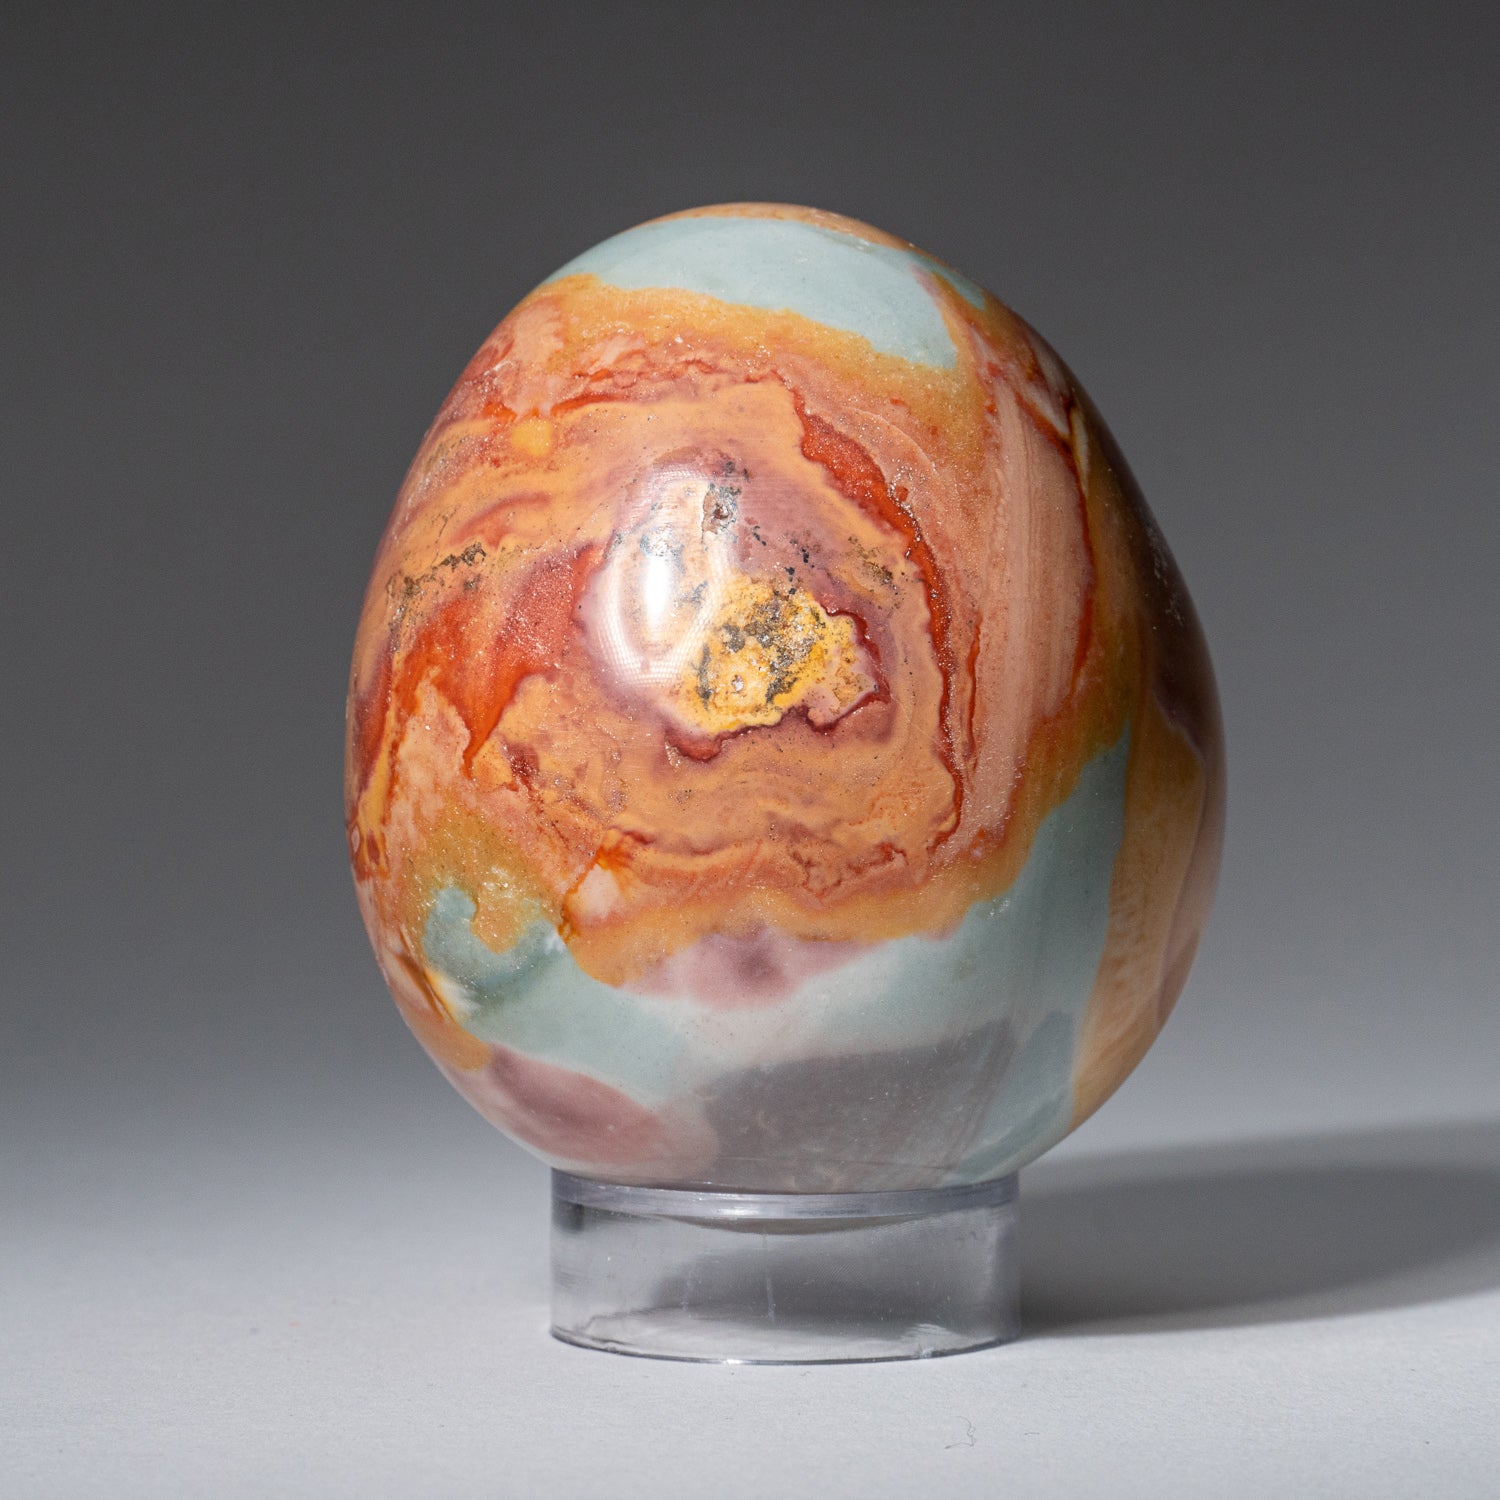 Genuine Polished Polychrome Egg from Madagascar (321.6 grams)